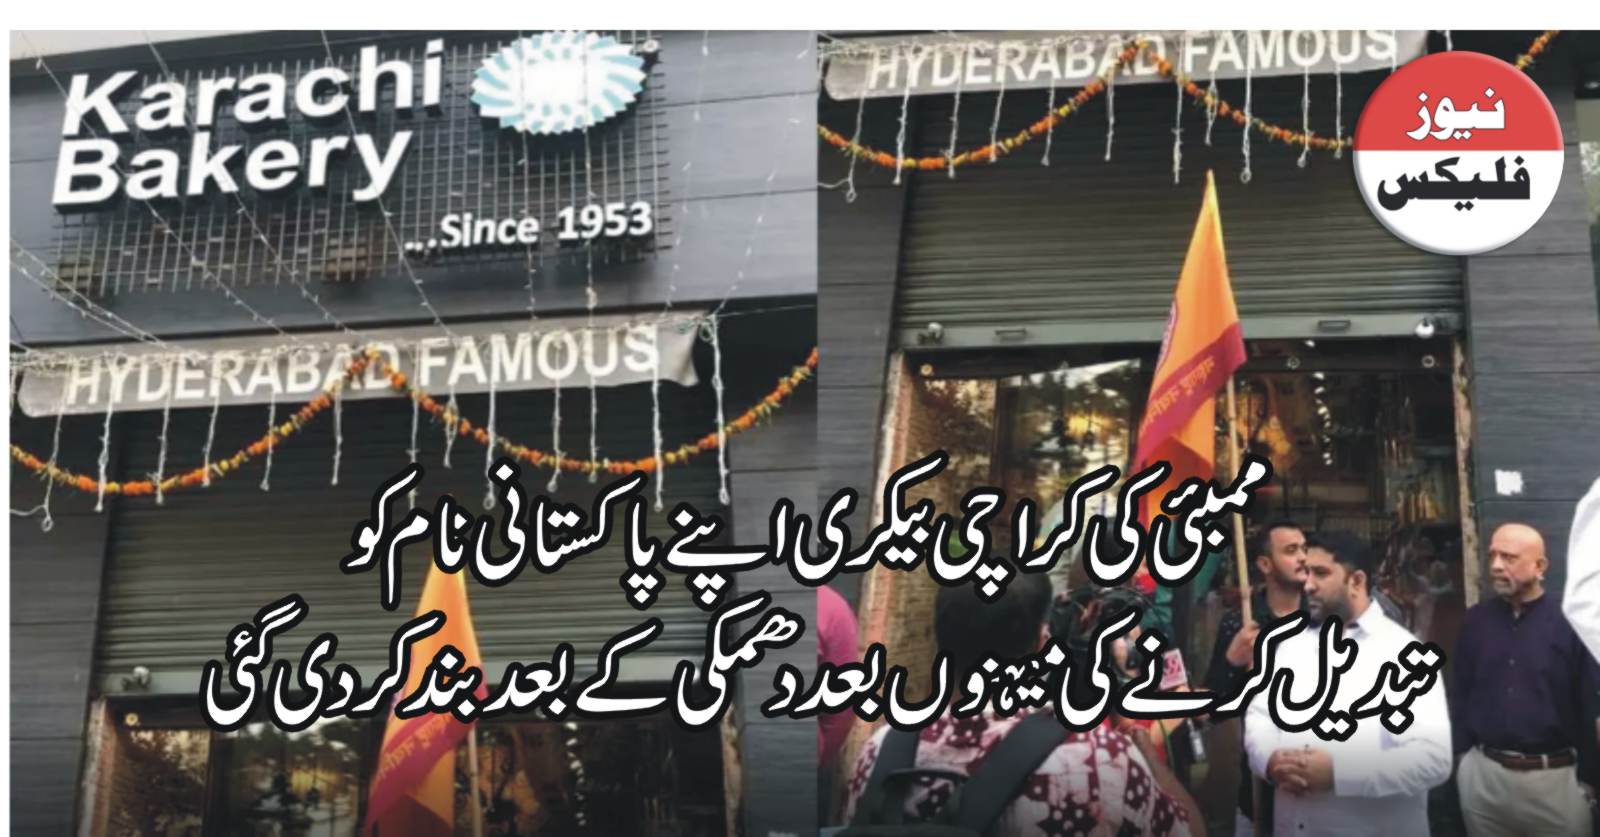 Mumbai’s ‘Karachi Bakery’ Closes Months After Threat To Change Its Pakistani Name